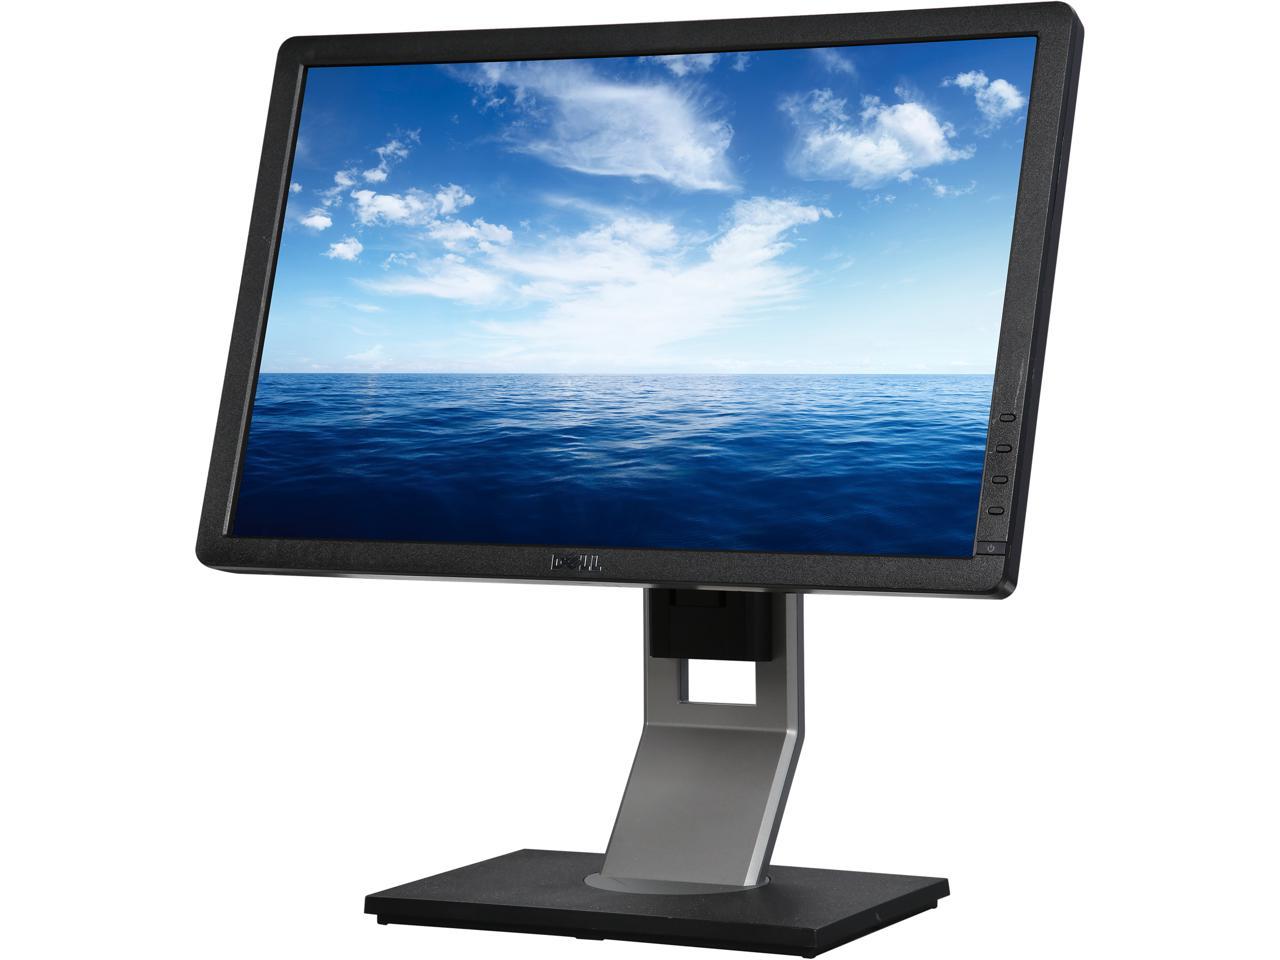 Dell 19" LCD Monitor Base stand Tilt/Swivel P2312Ht P2012Ht P2213t P1913t 